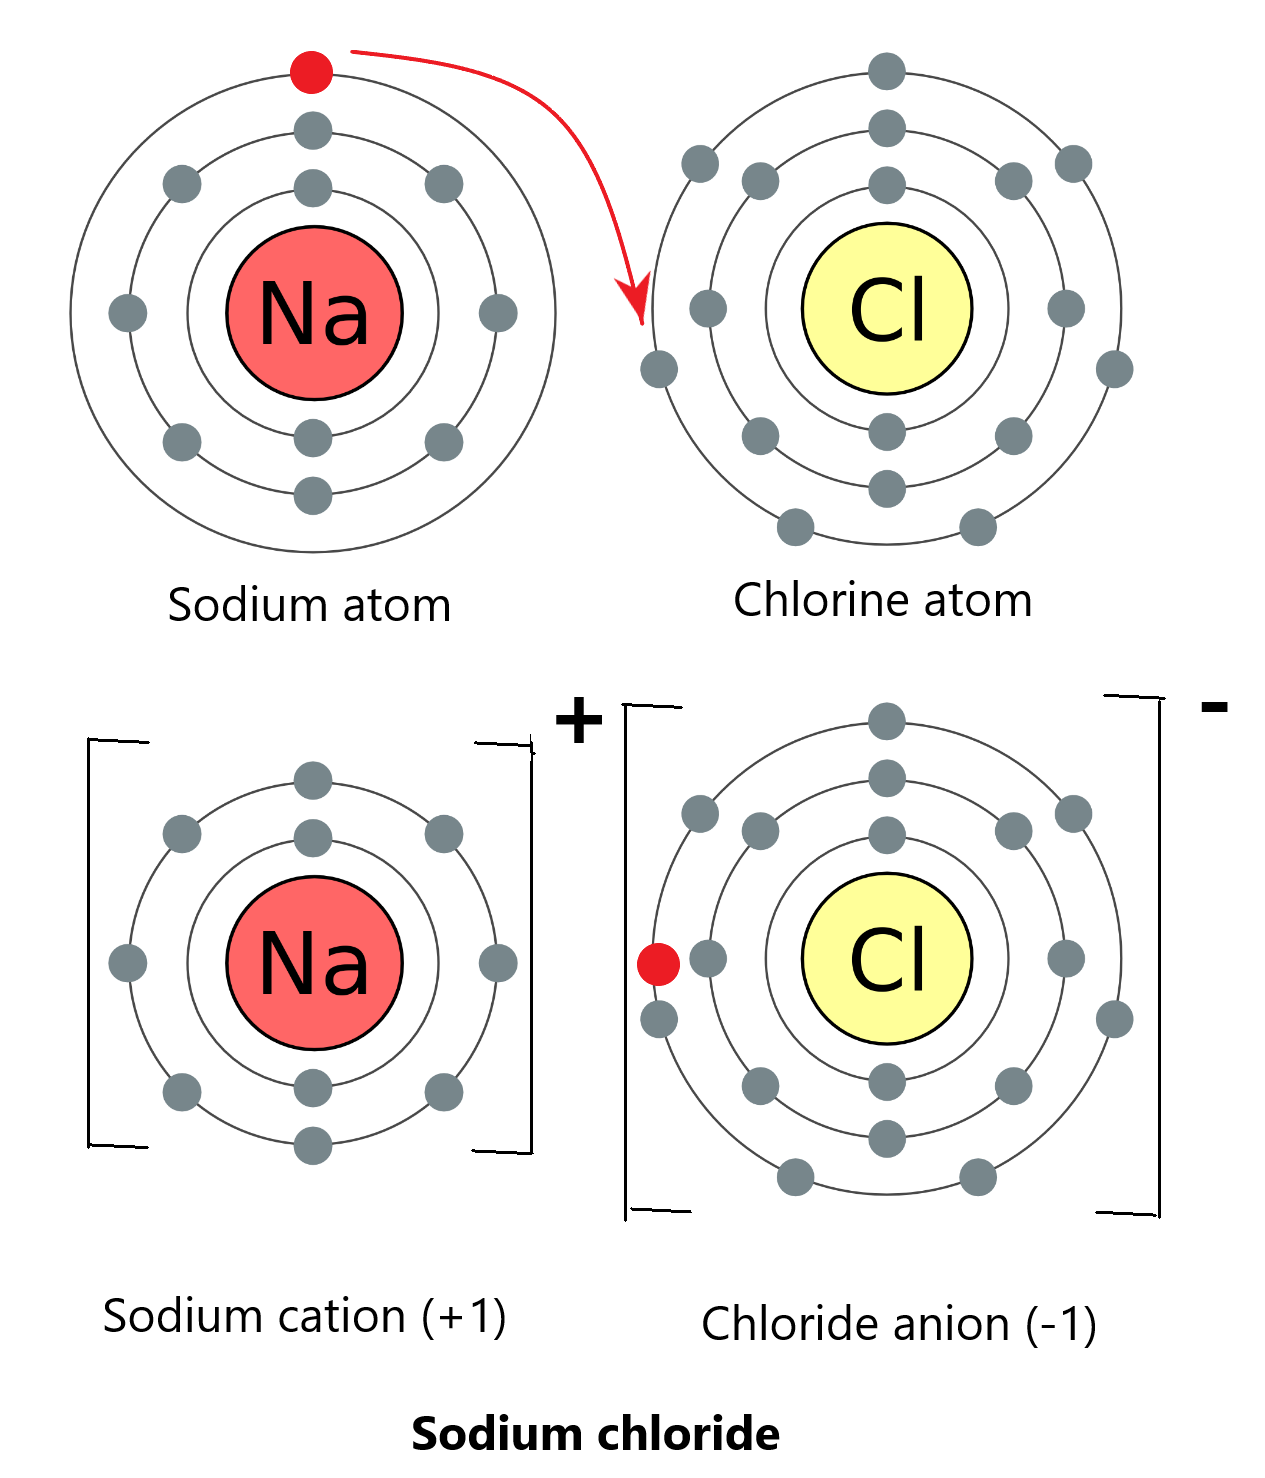 Atomic element